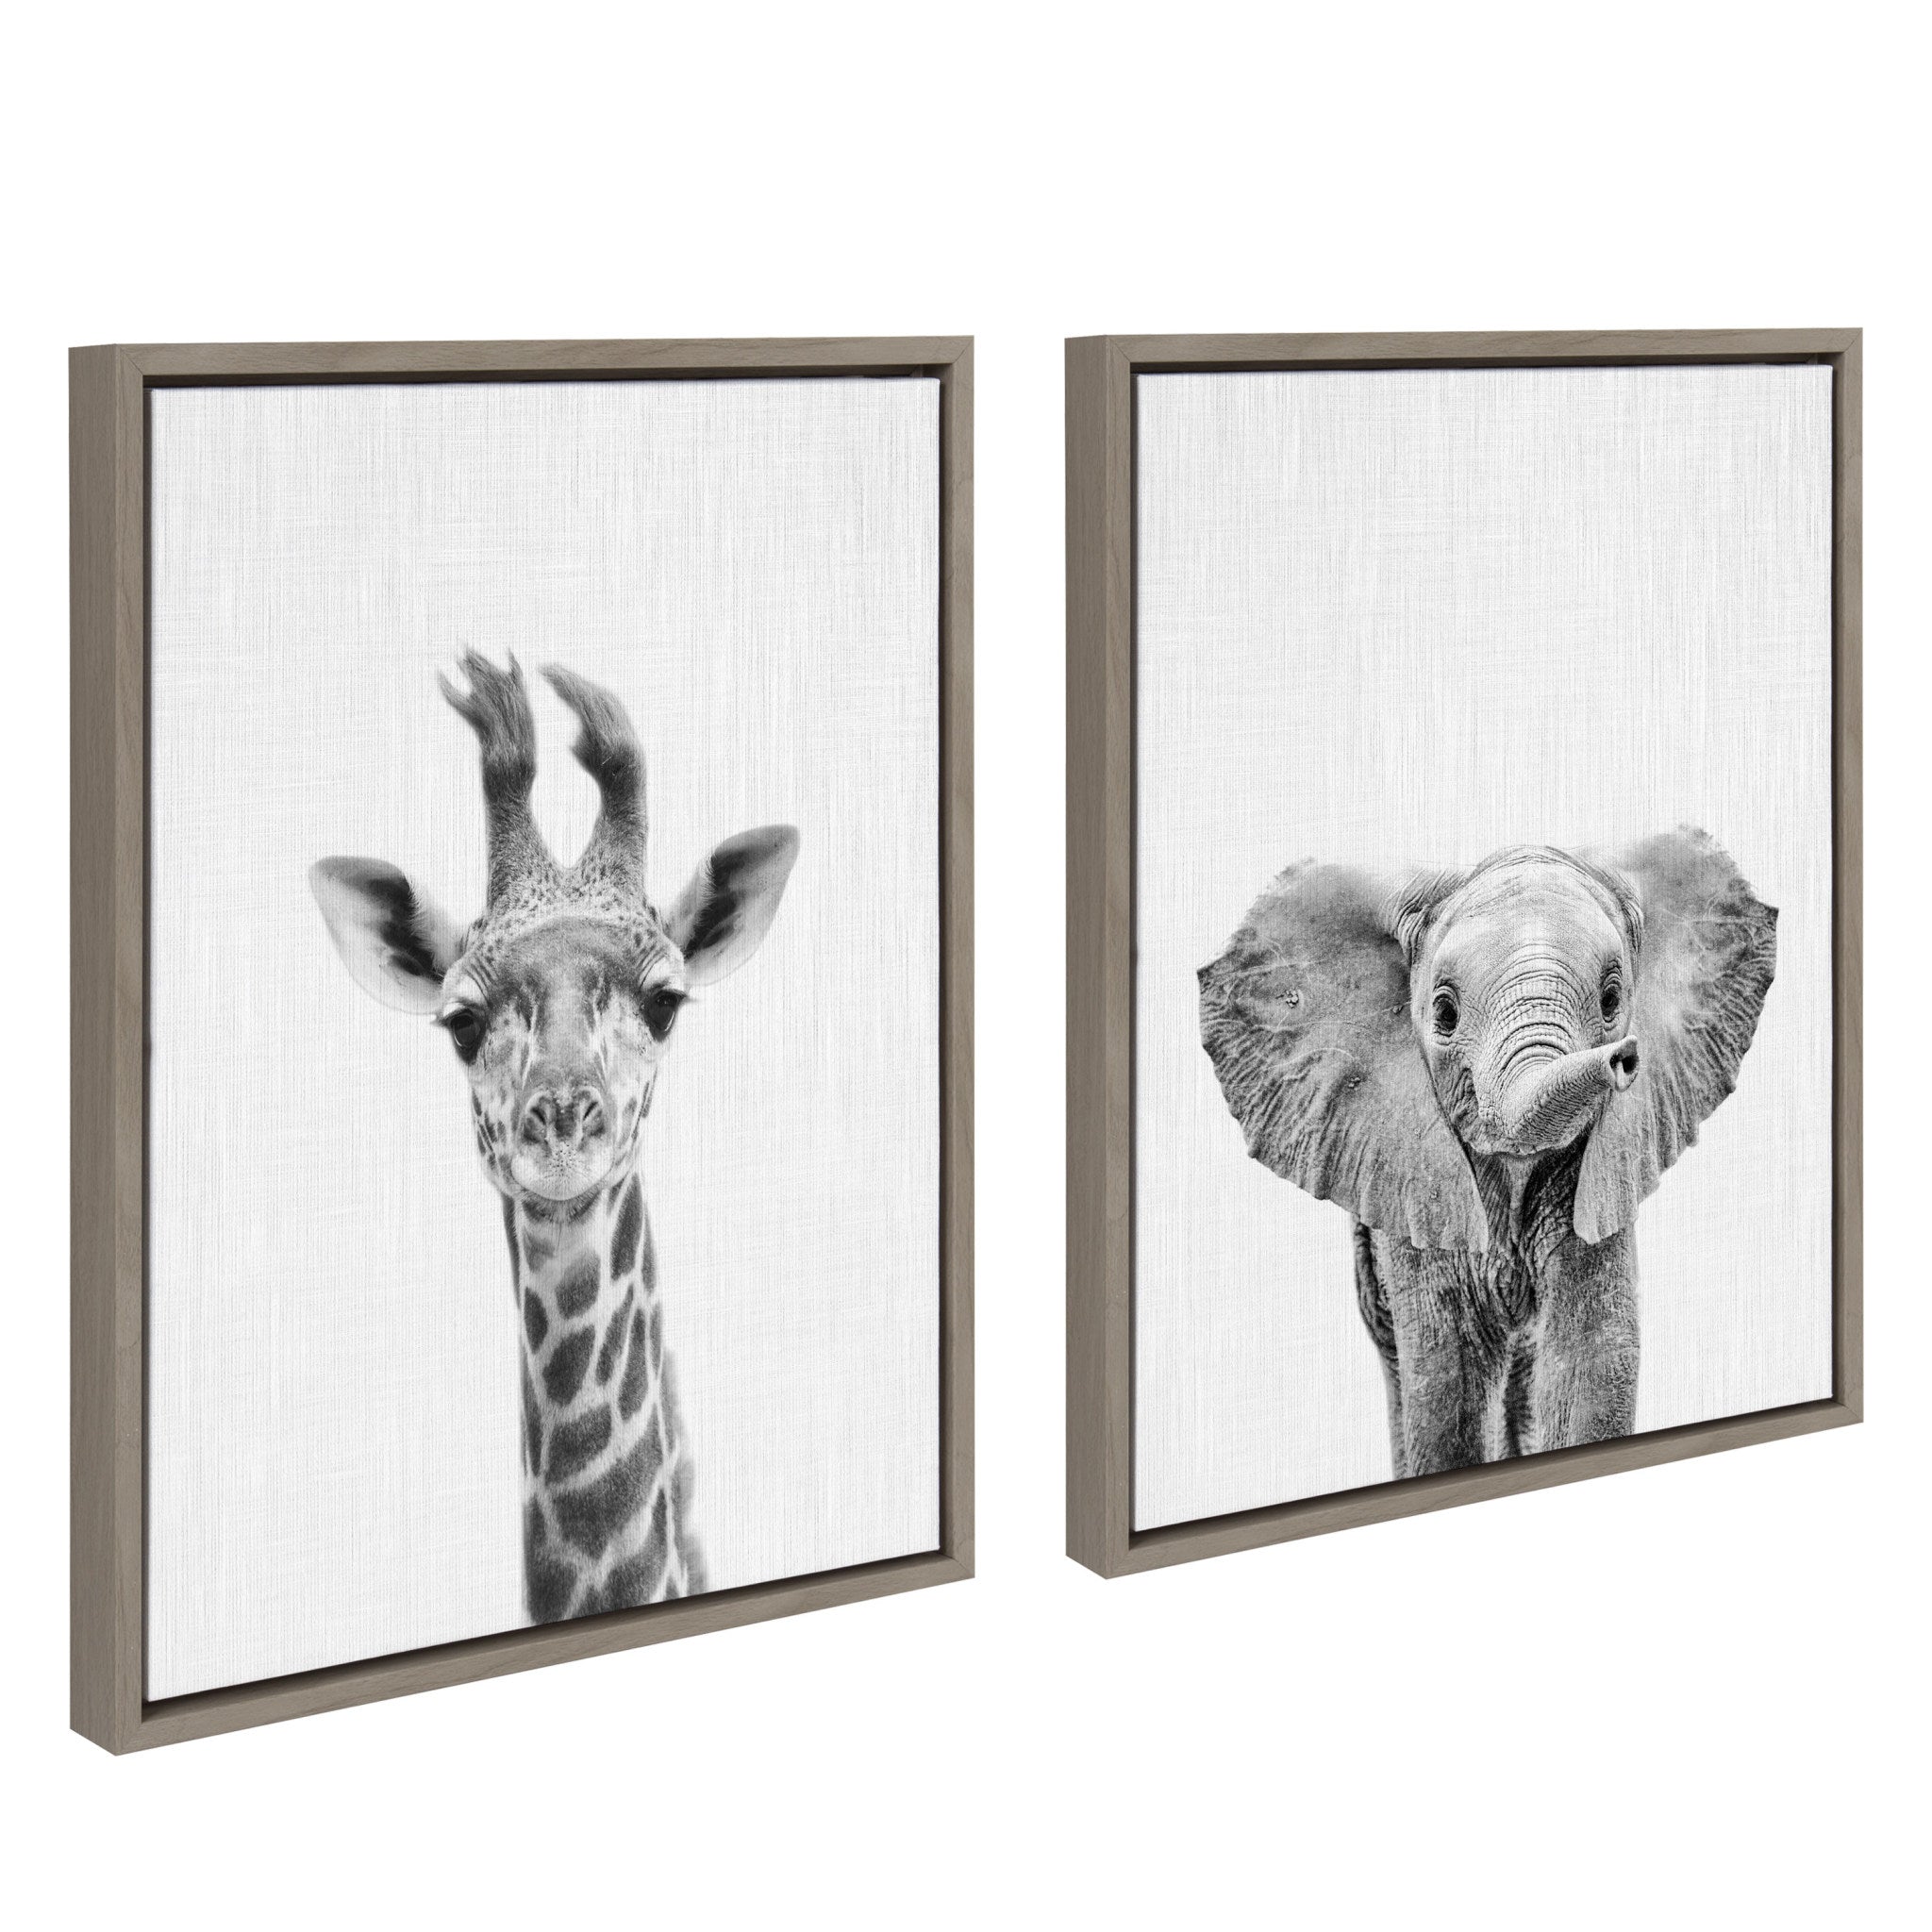 Sylvie Baby Giraffe and Elephant Framed Canvas Art Set by Simon Te of Tai Prints